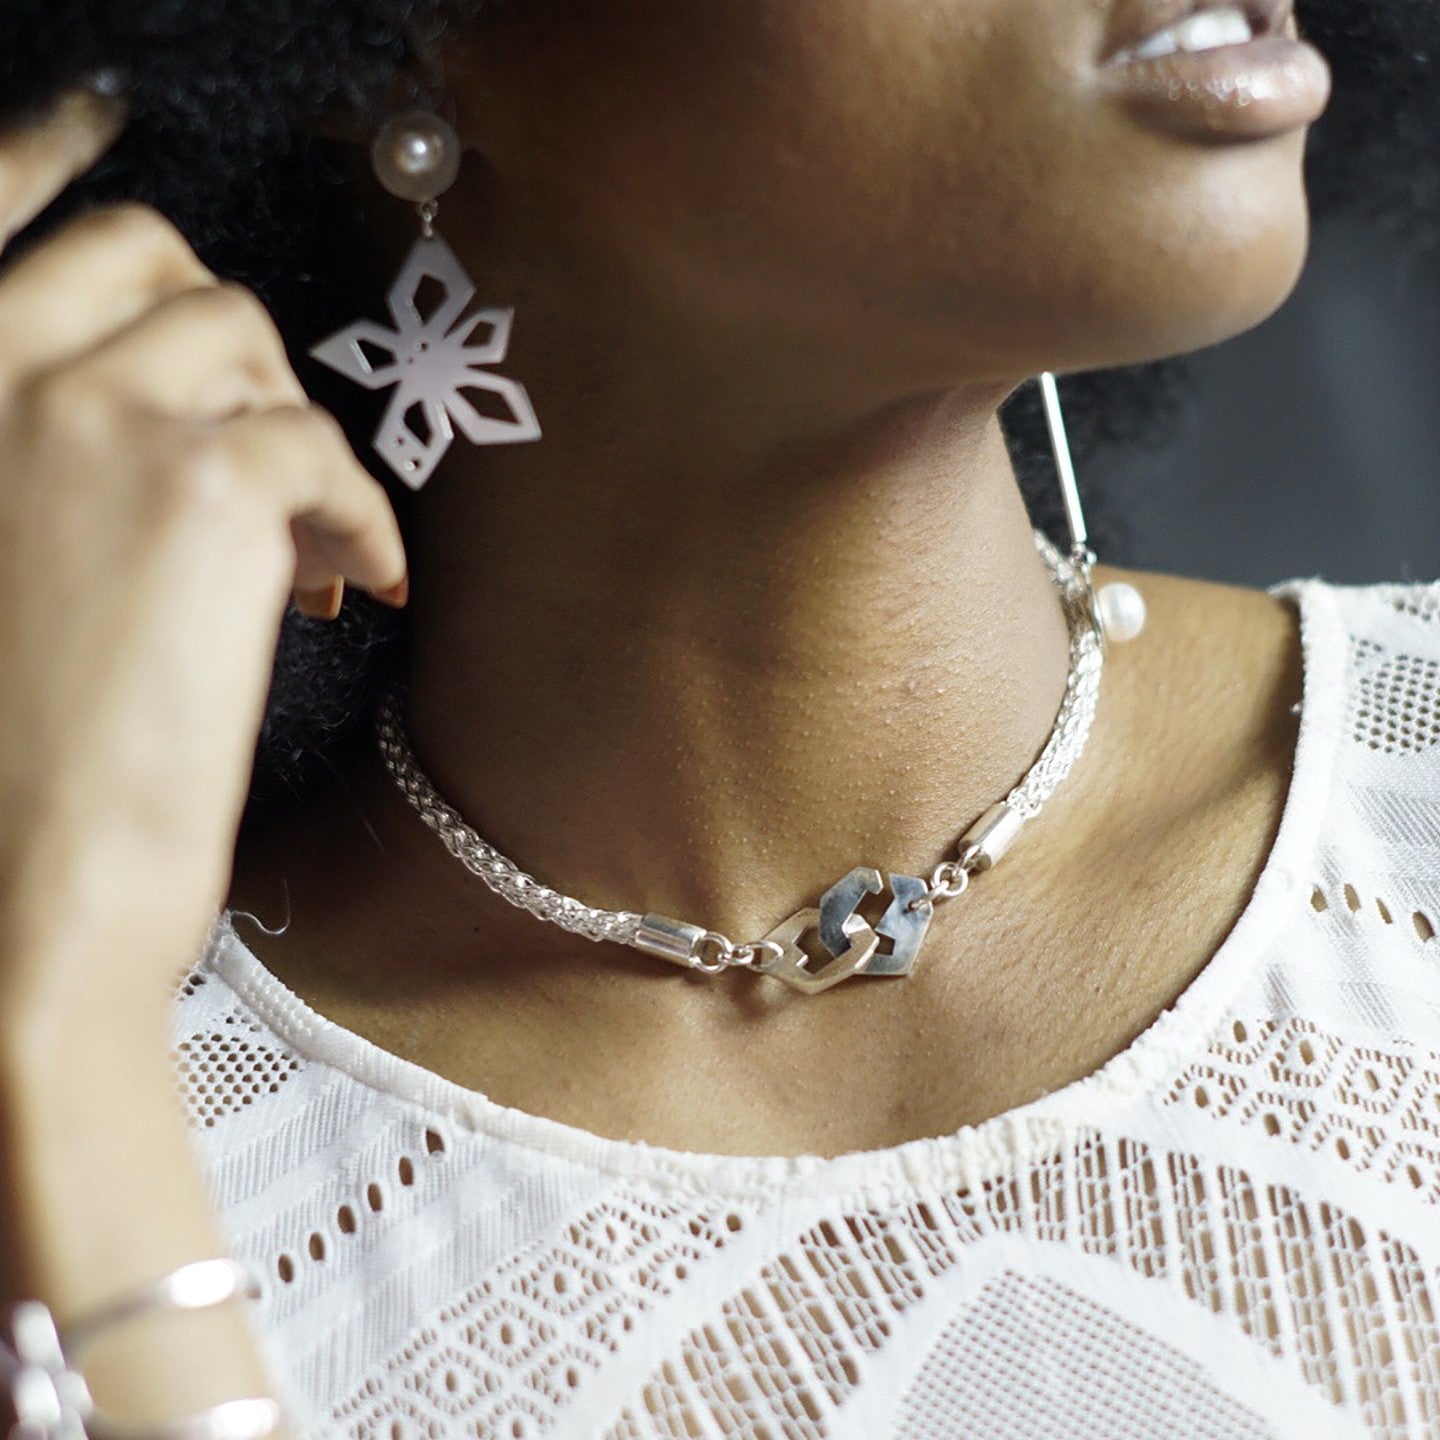 Nova Earrings and Presence III-Loop Choker Necklace on model